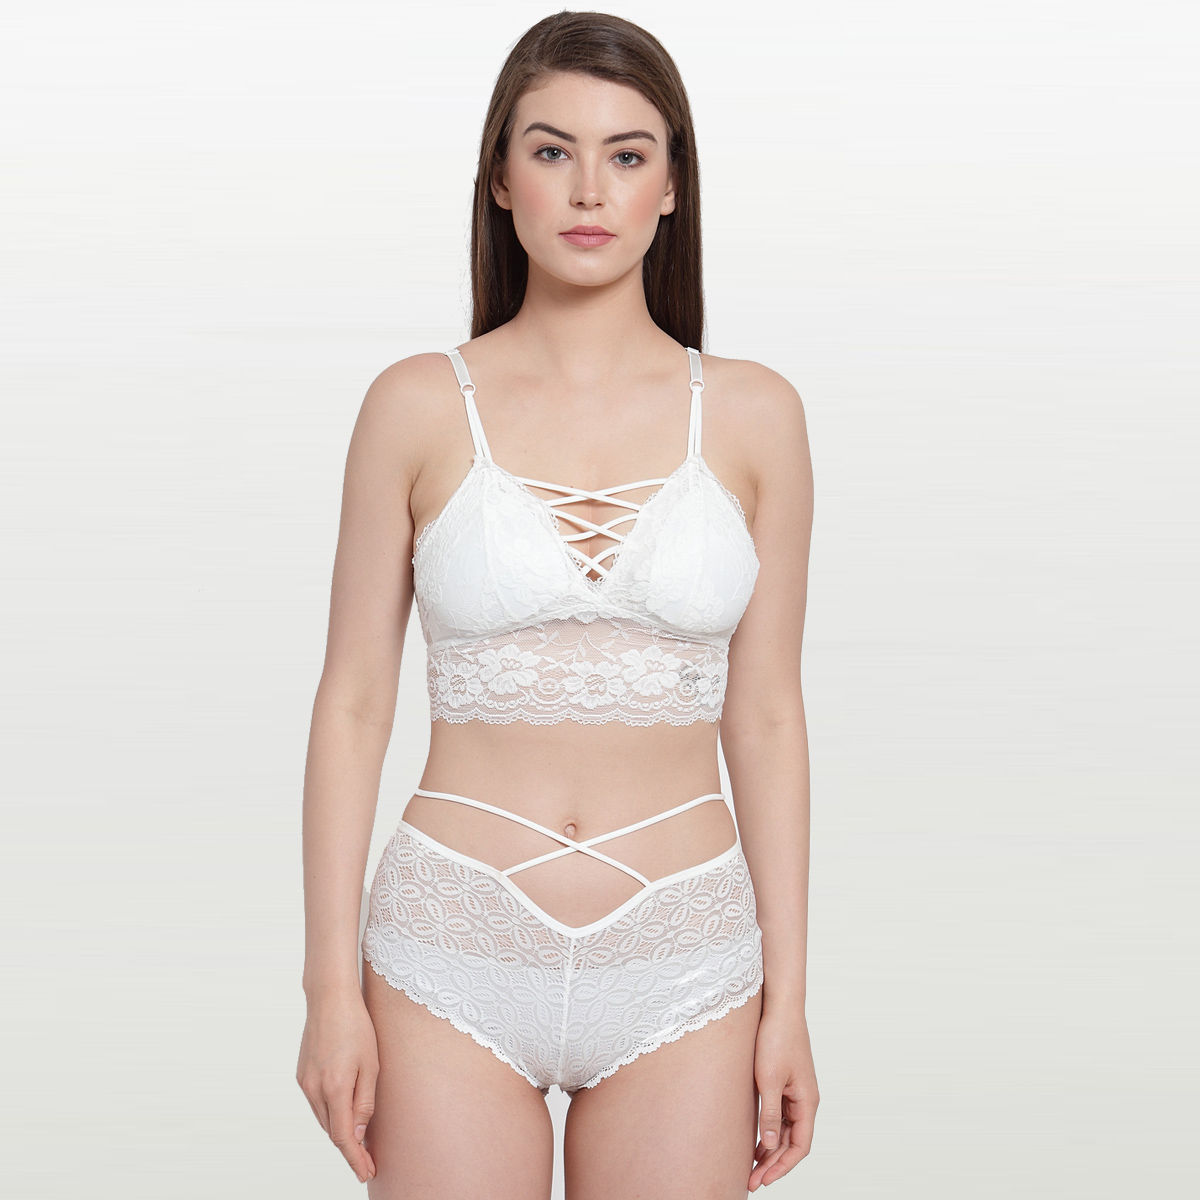 Buy PrettyCat Elegant Lace Bralette Set - White Online